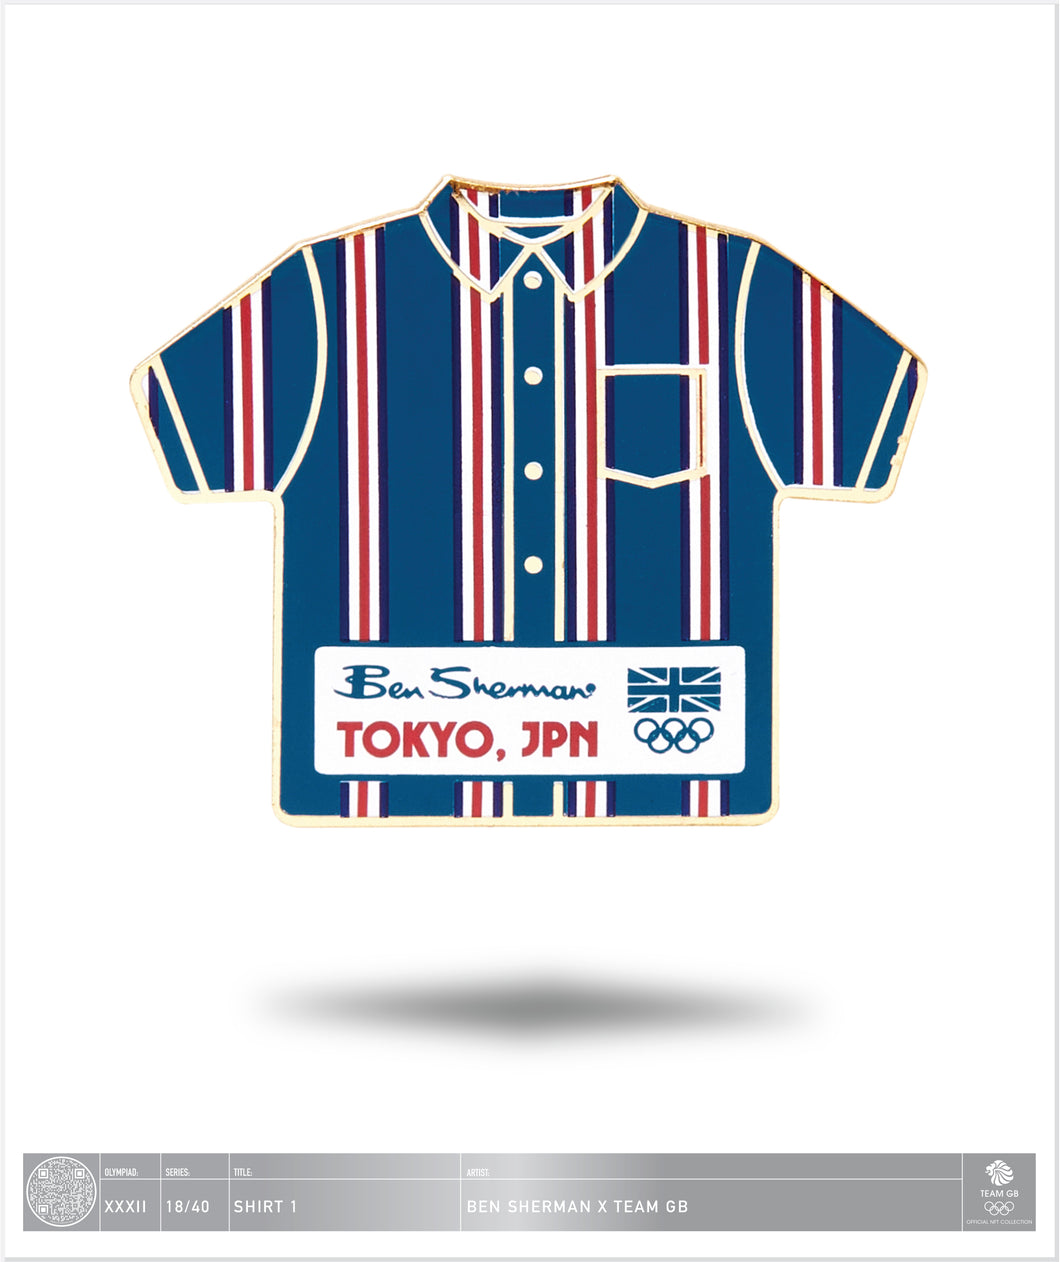 Ben Sherman Tokyo - Shirt 1 - 18 / 40